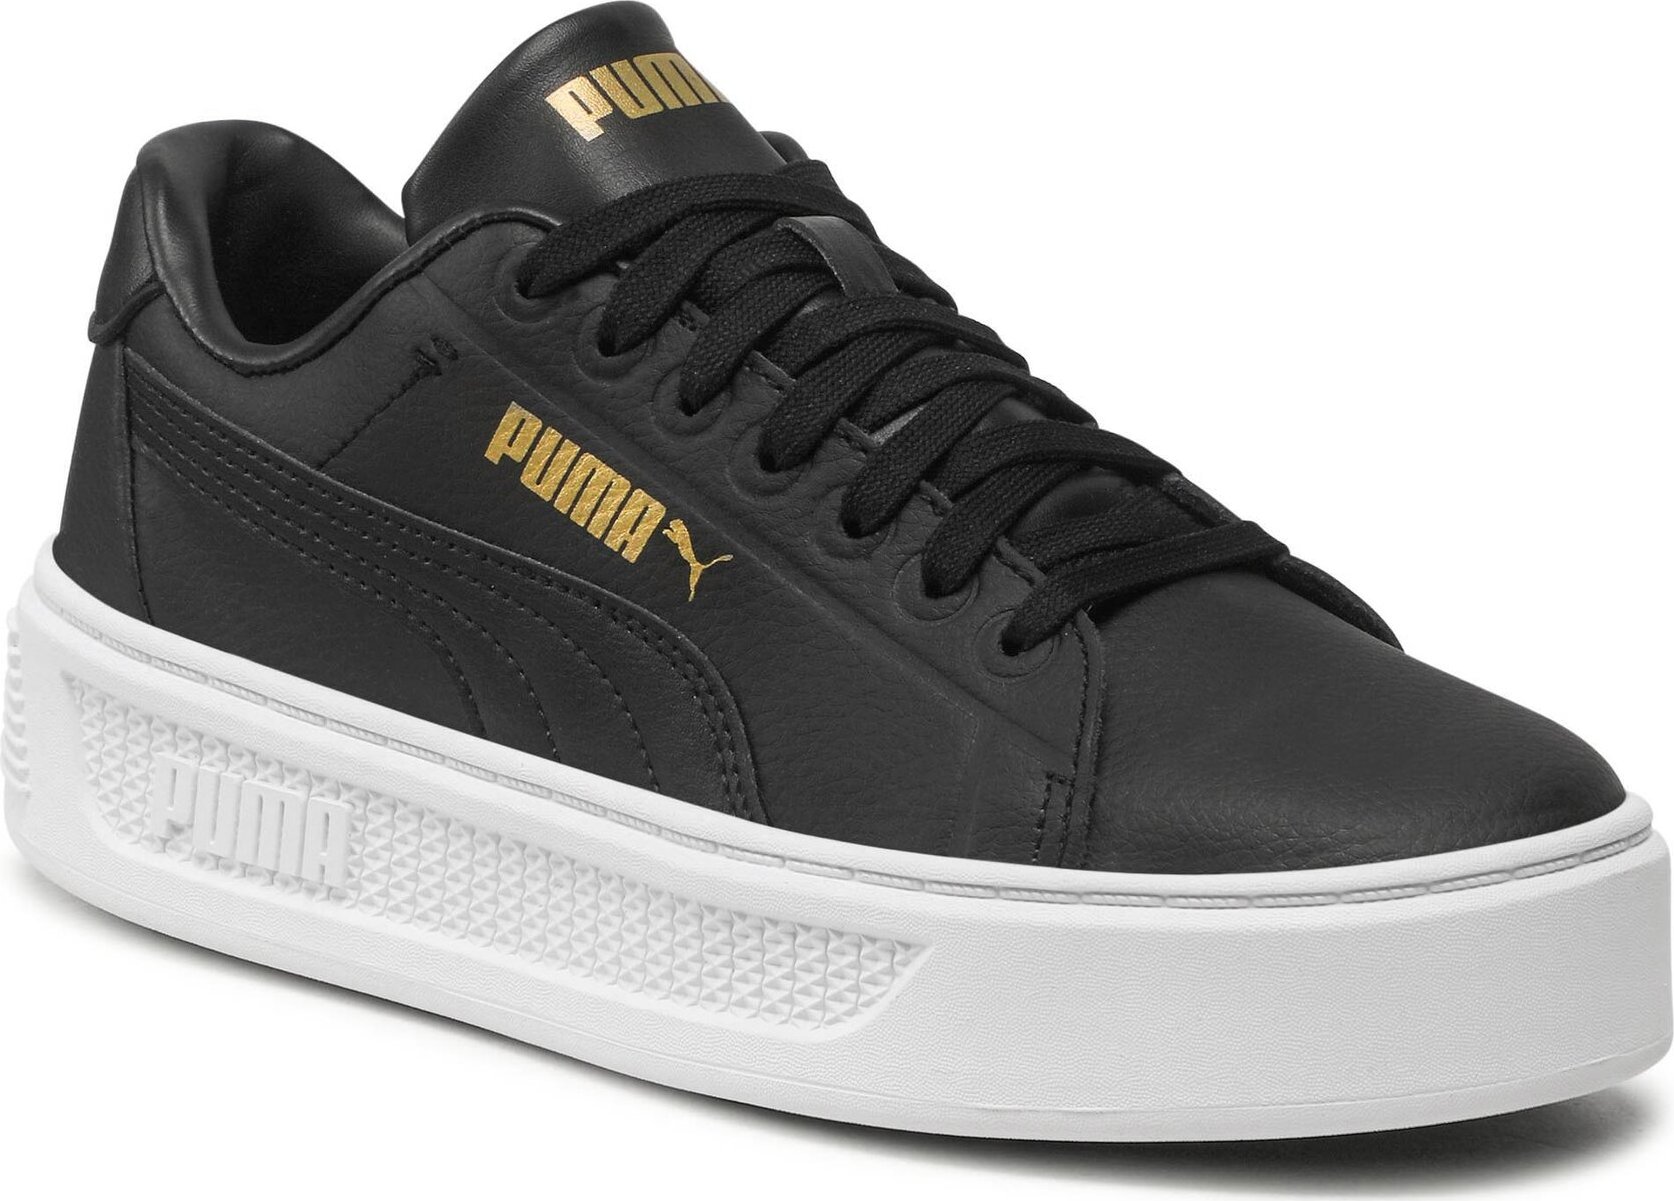 Sneakersy Puma Smash Platform V3 Sleek 389401 02 Puma Black/Gold/Puma White